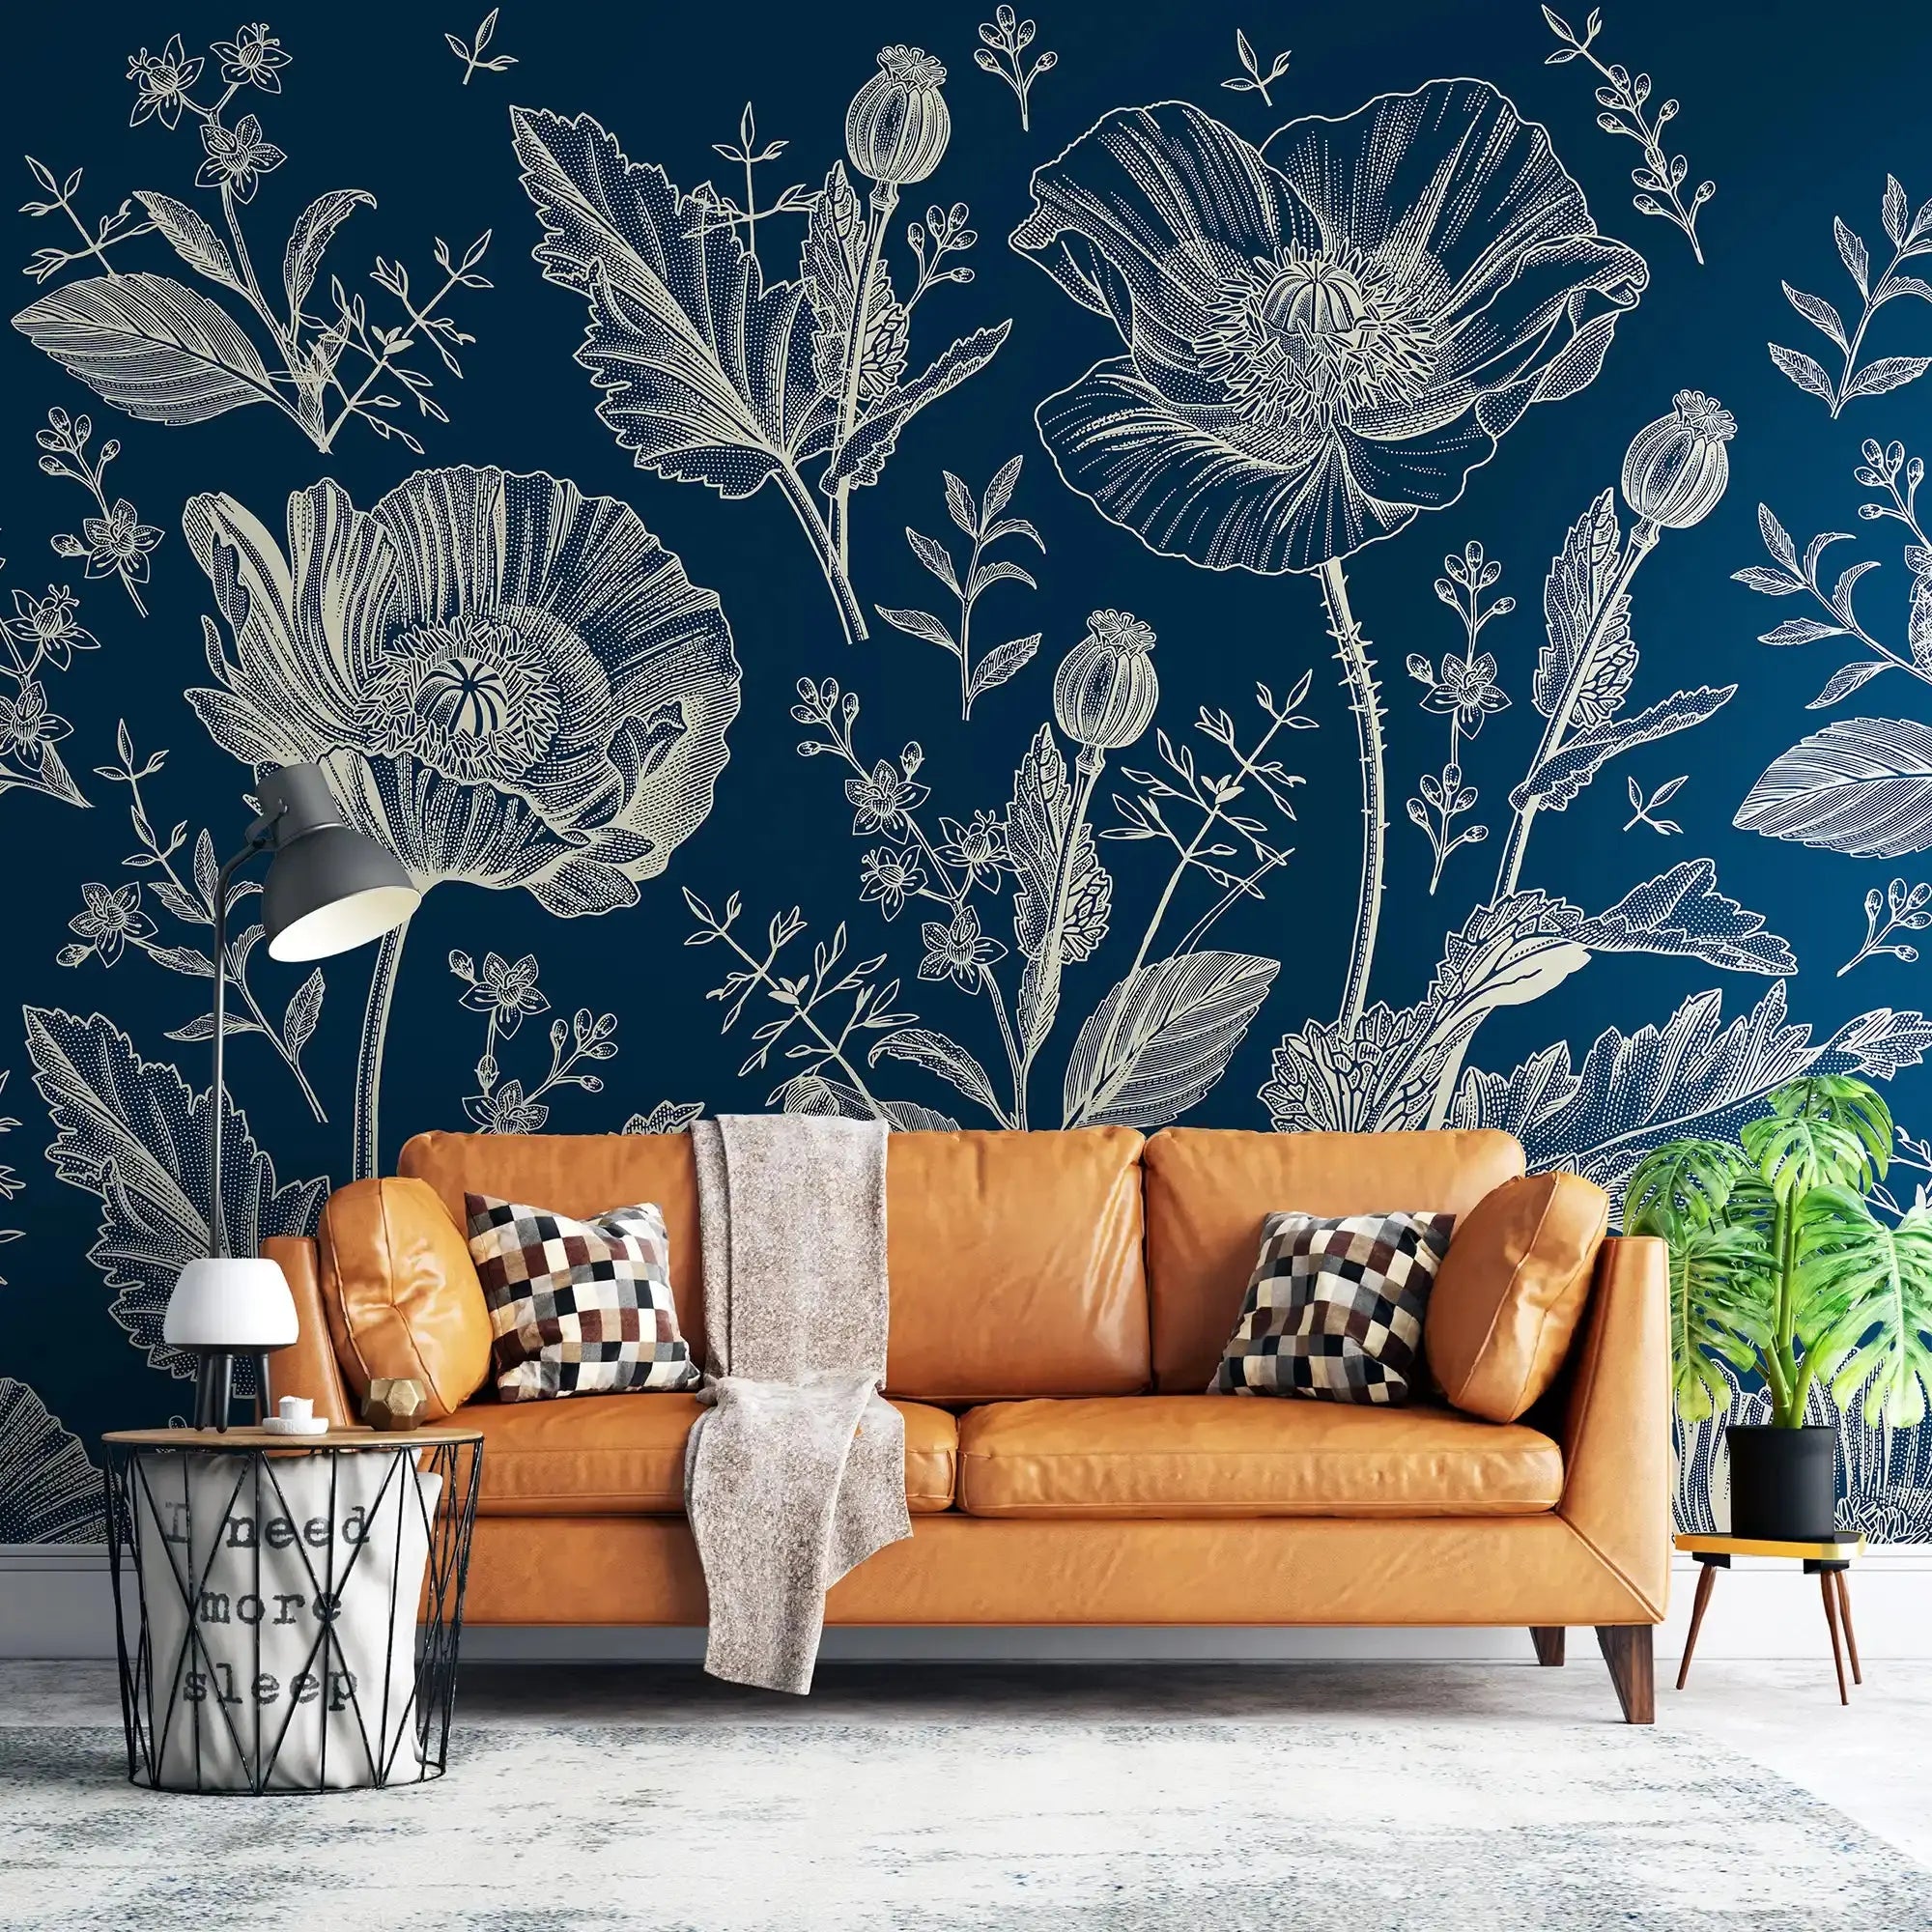 3093-B / Floral Wall Mural: Self Adhesive, Removable Wallpaper for Modern and Boho Decor - Artevella